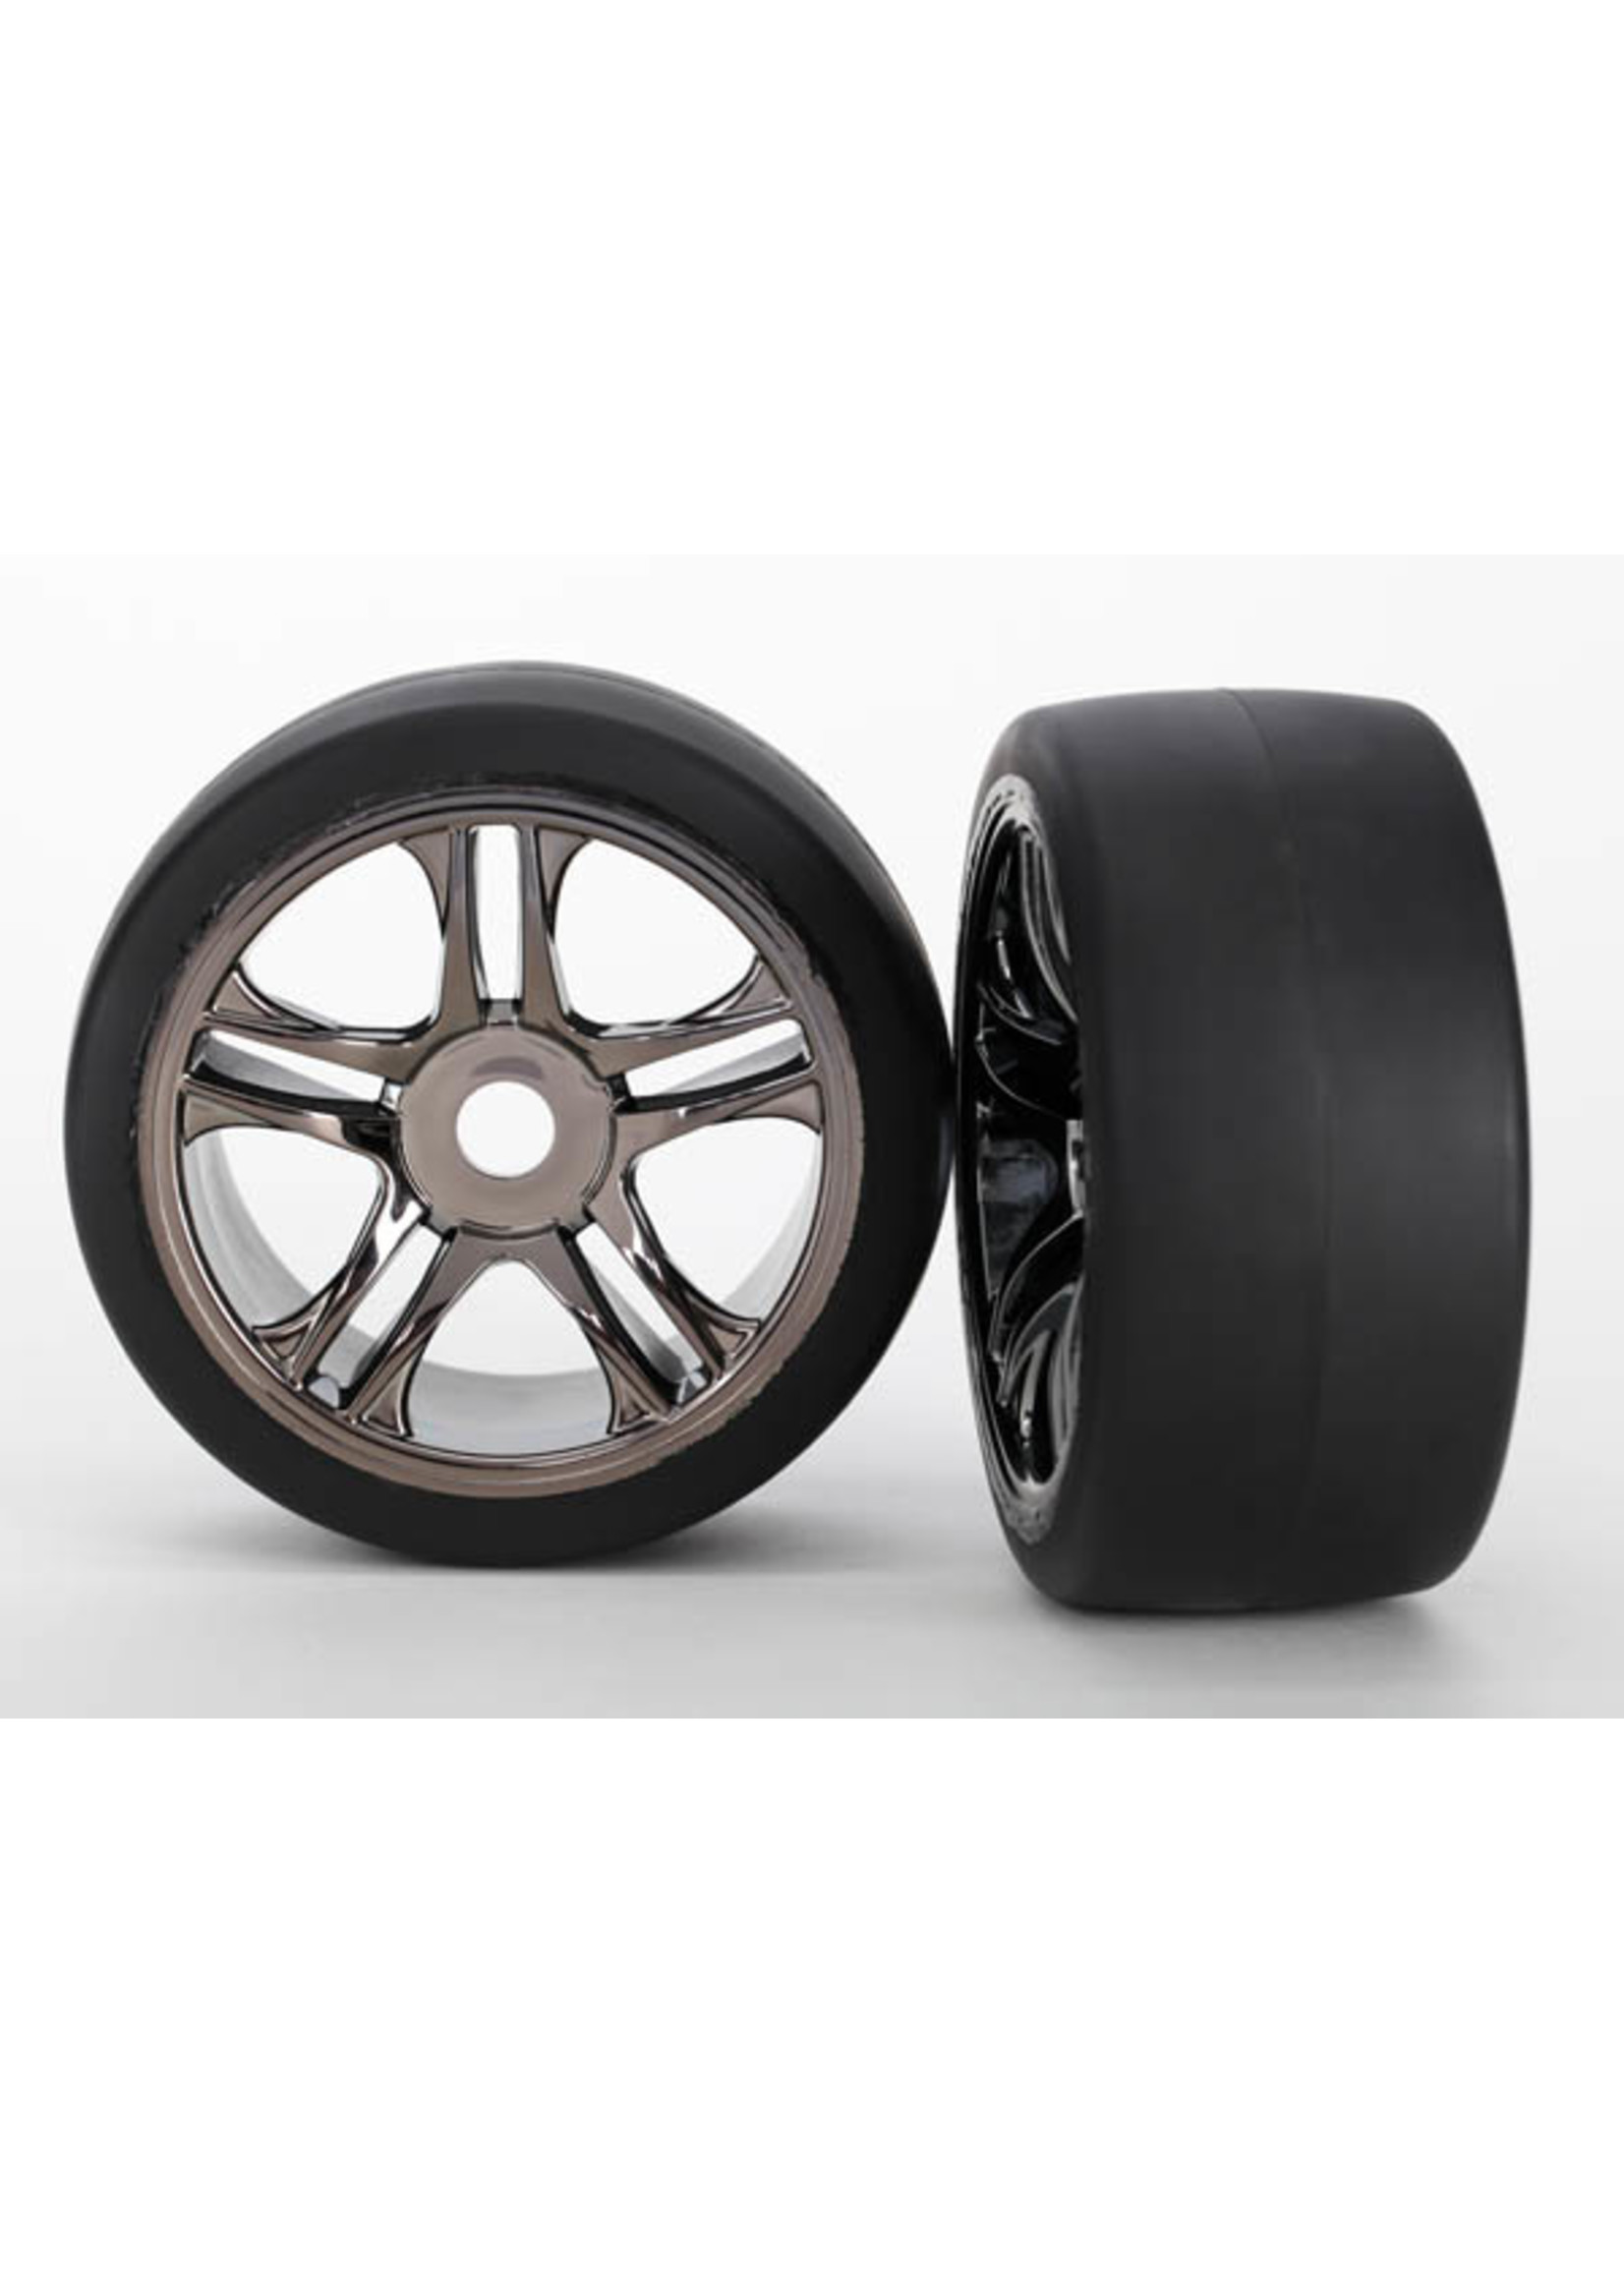 Traxxas 6479 - Split Spoke Black Chrome Wheels / S1 Compound Slick Tires - Front